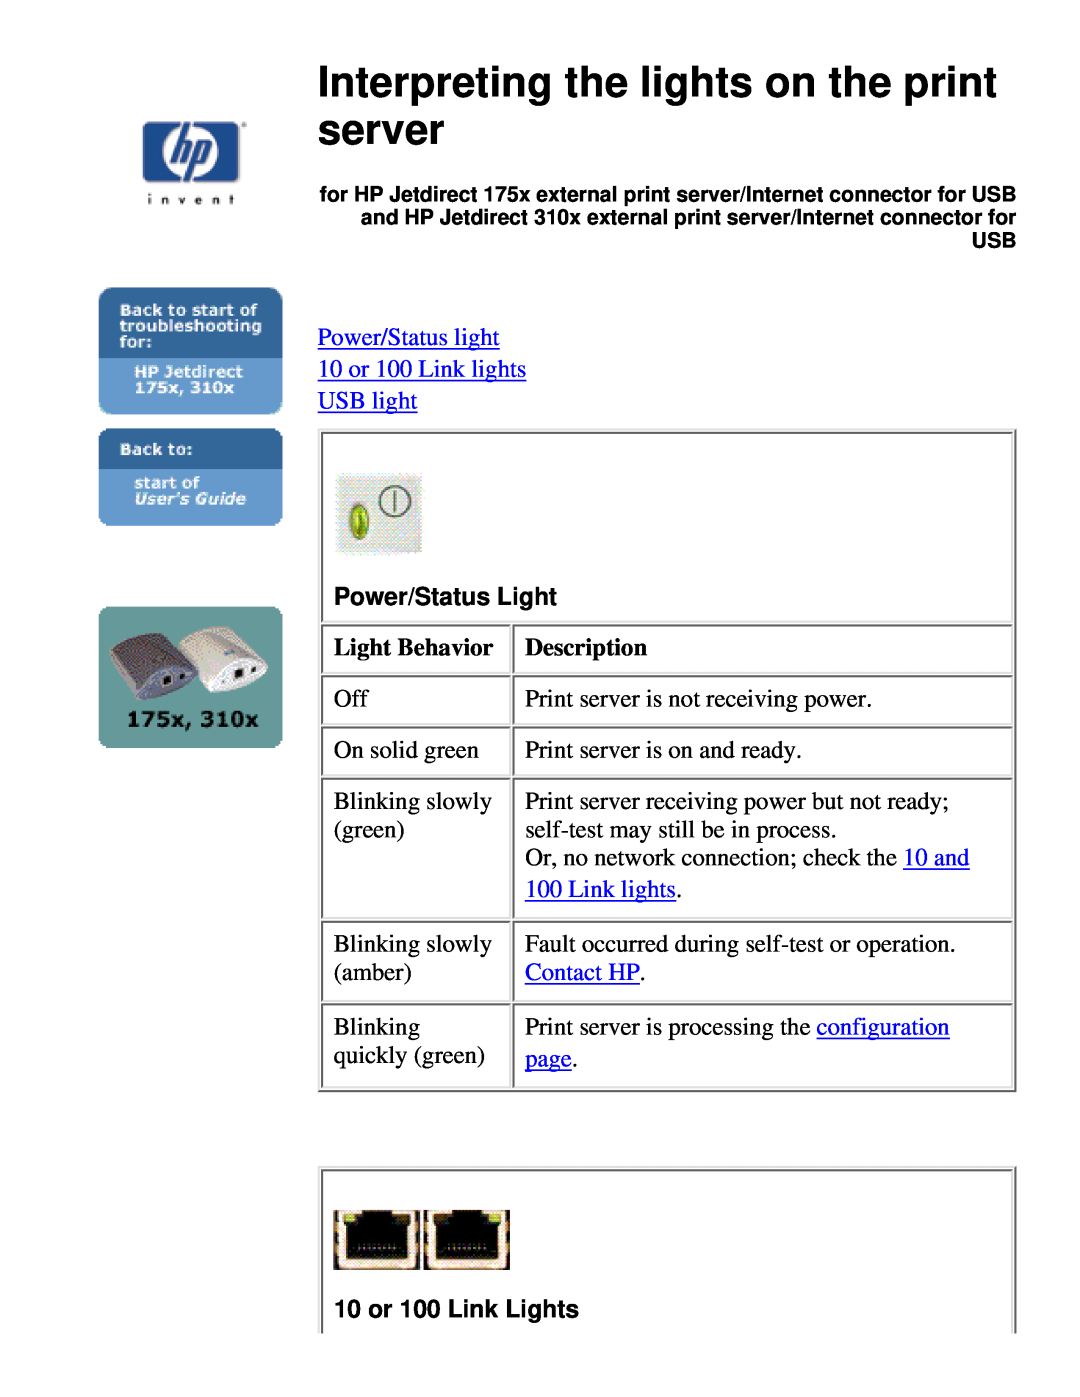 HP 310X Interpreting the lights on the print server, Power/Status light 10 or 100 Link lights USB light, Light Behavior 